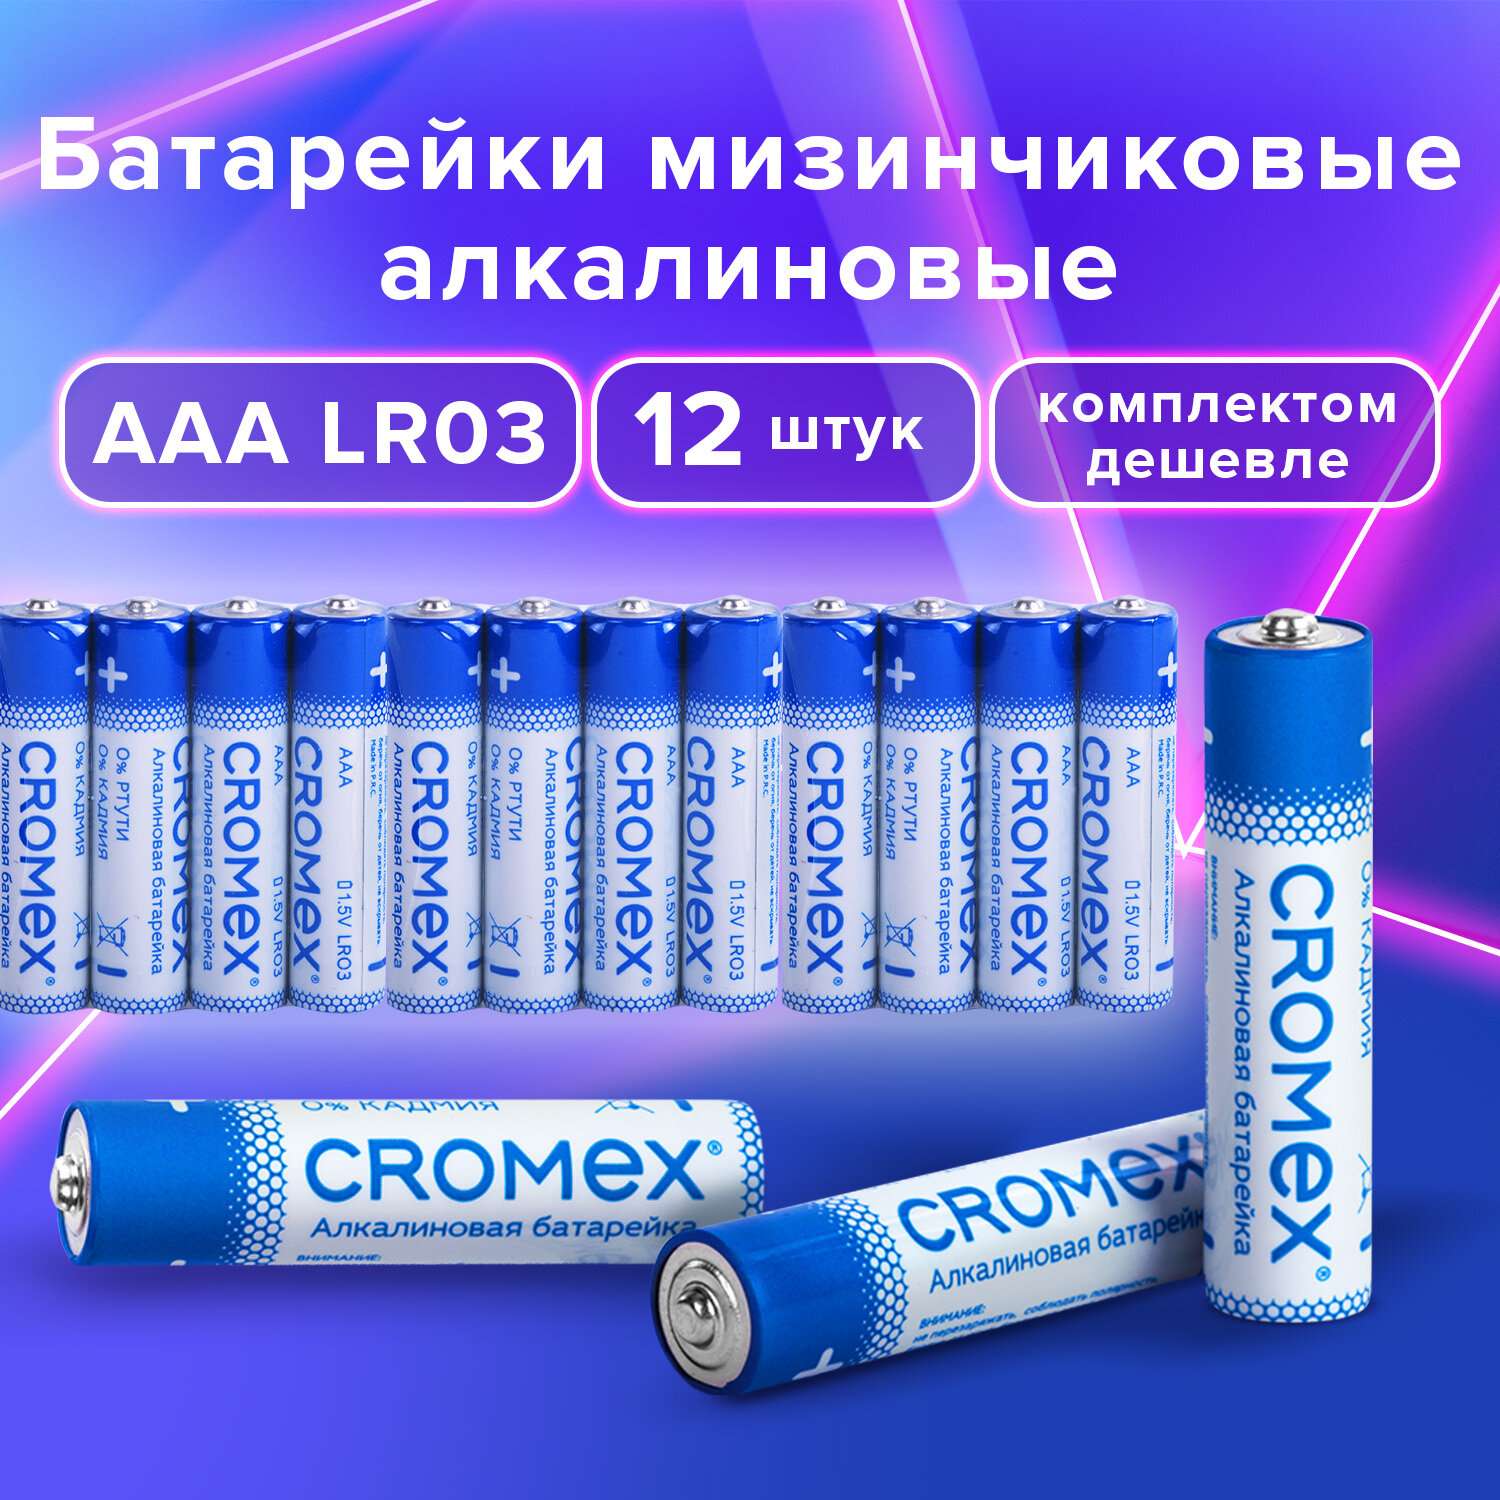 Батарейки алкалиновые CROMEX мизинчиковые AAA набор 11 штук для весов часов фонарика - фото 2